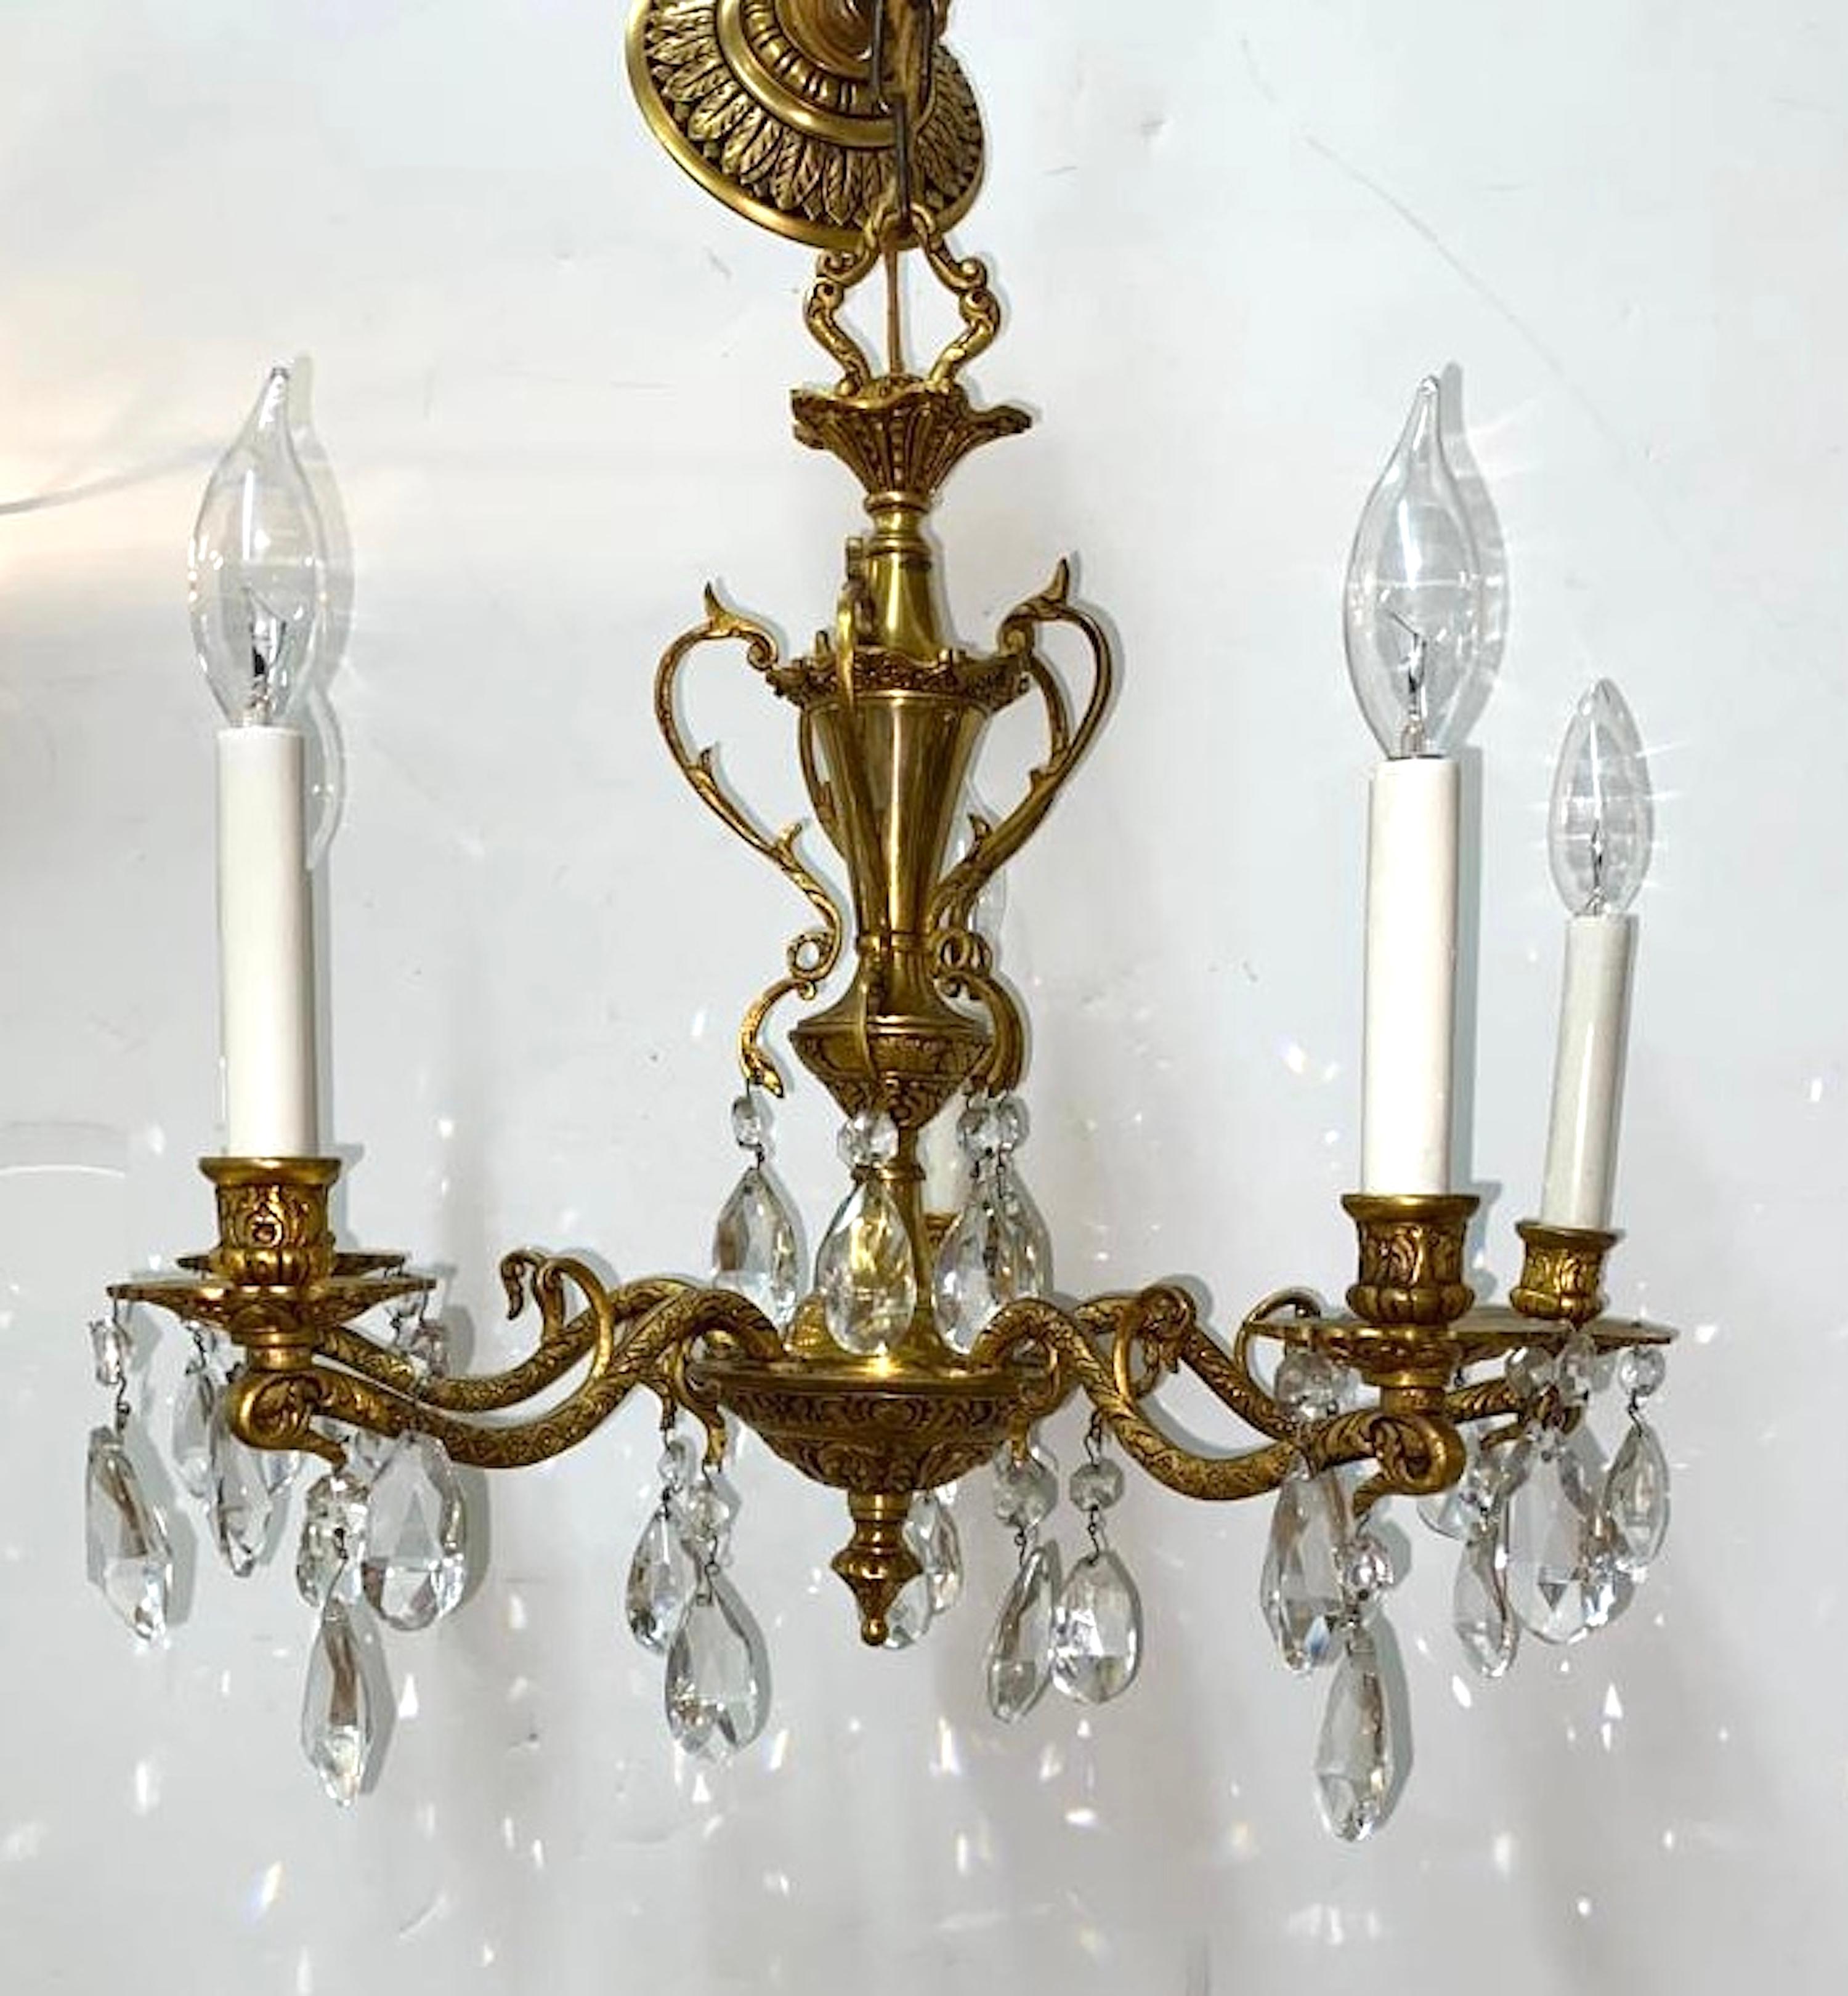 Baroque Revival Spanish Baroque Dore' Bronze Petit Chandelier with Crystals